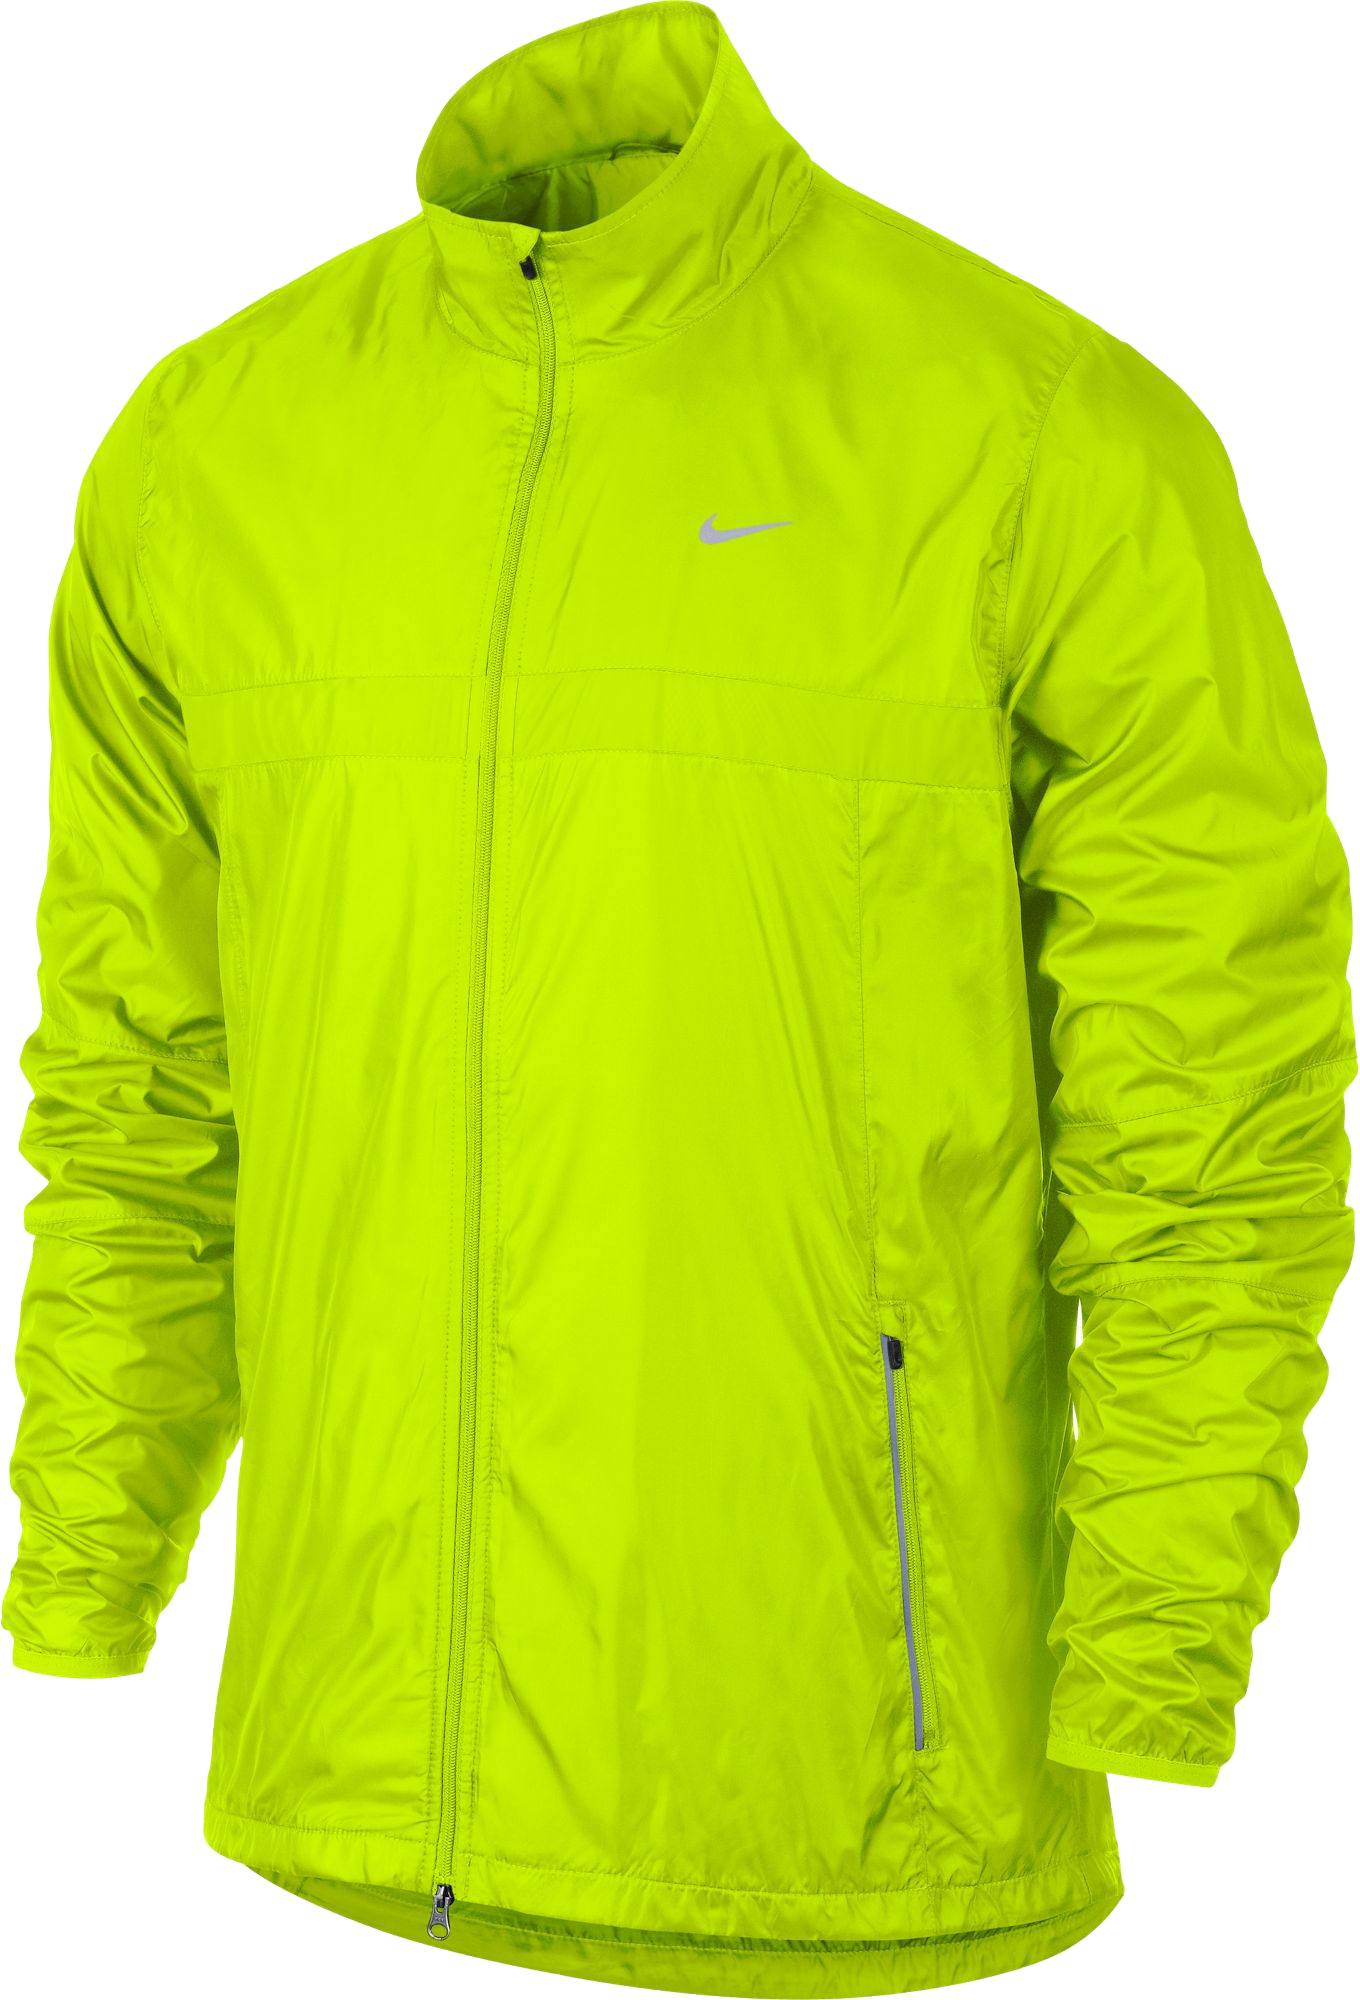 Coat clipart raincoat. Jacket png images free